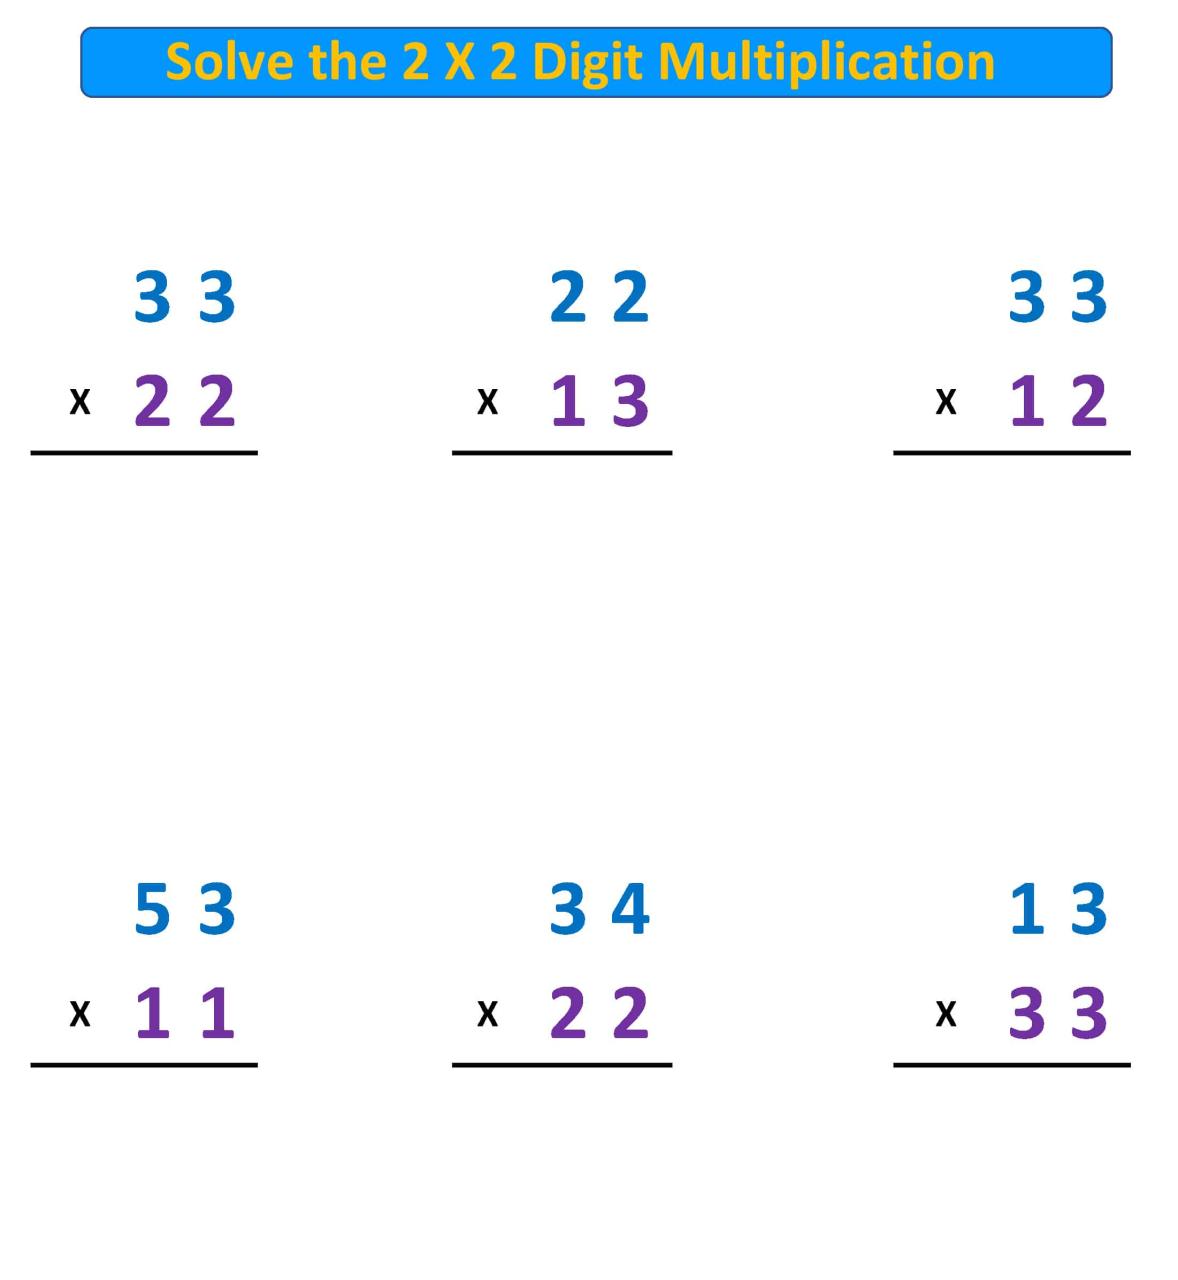 2 Digit Multiplication Explained